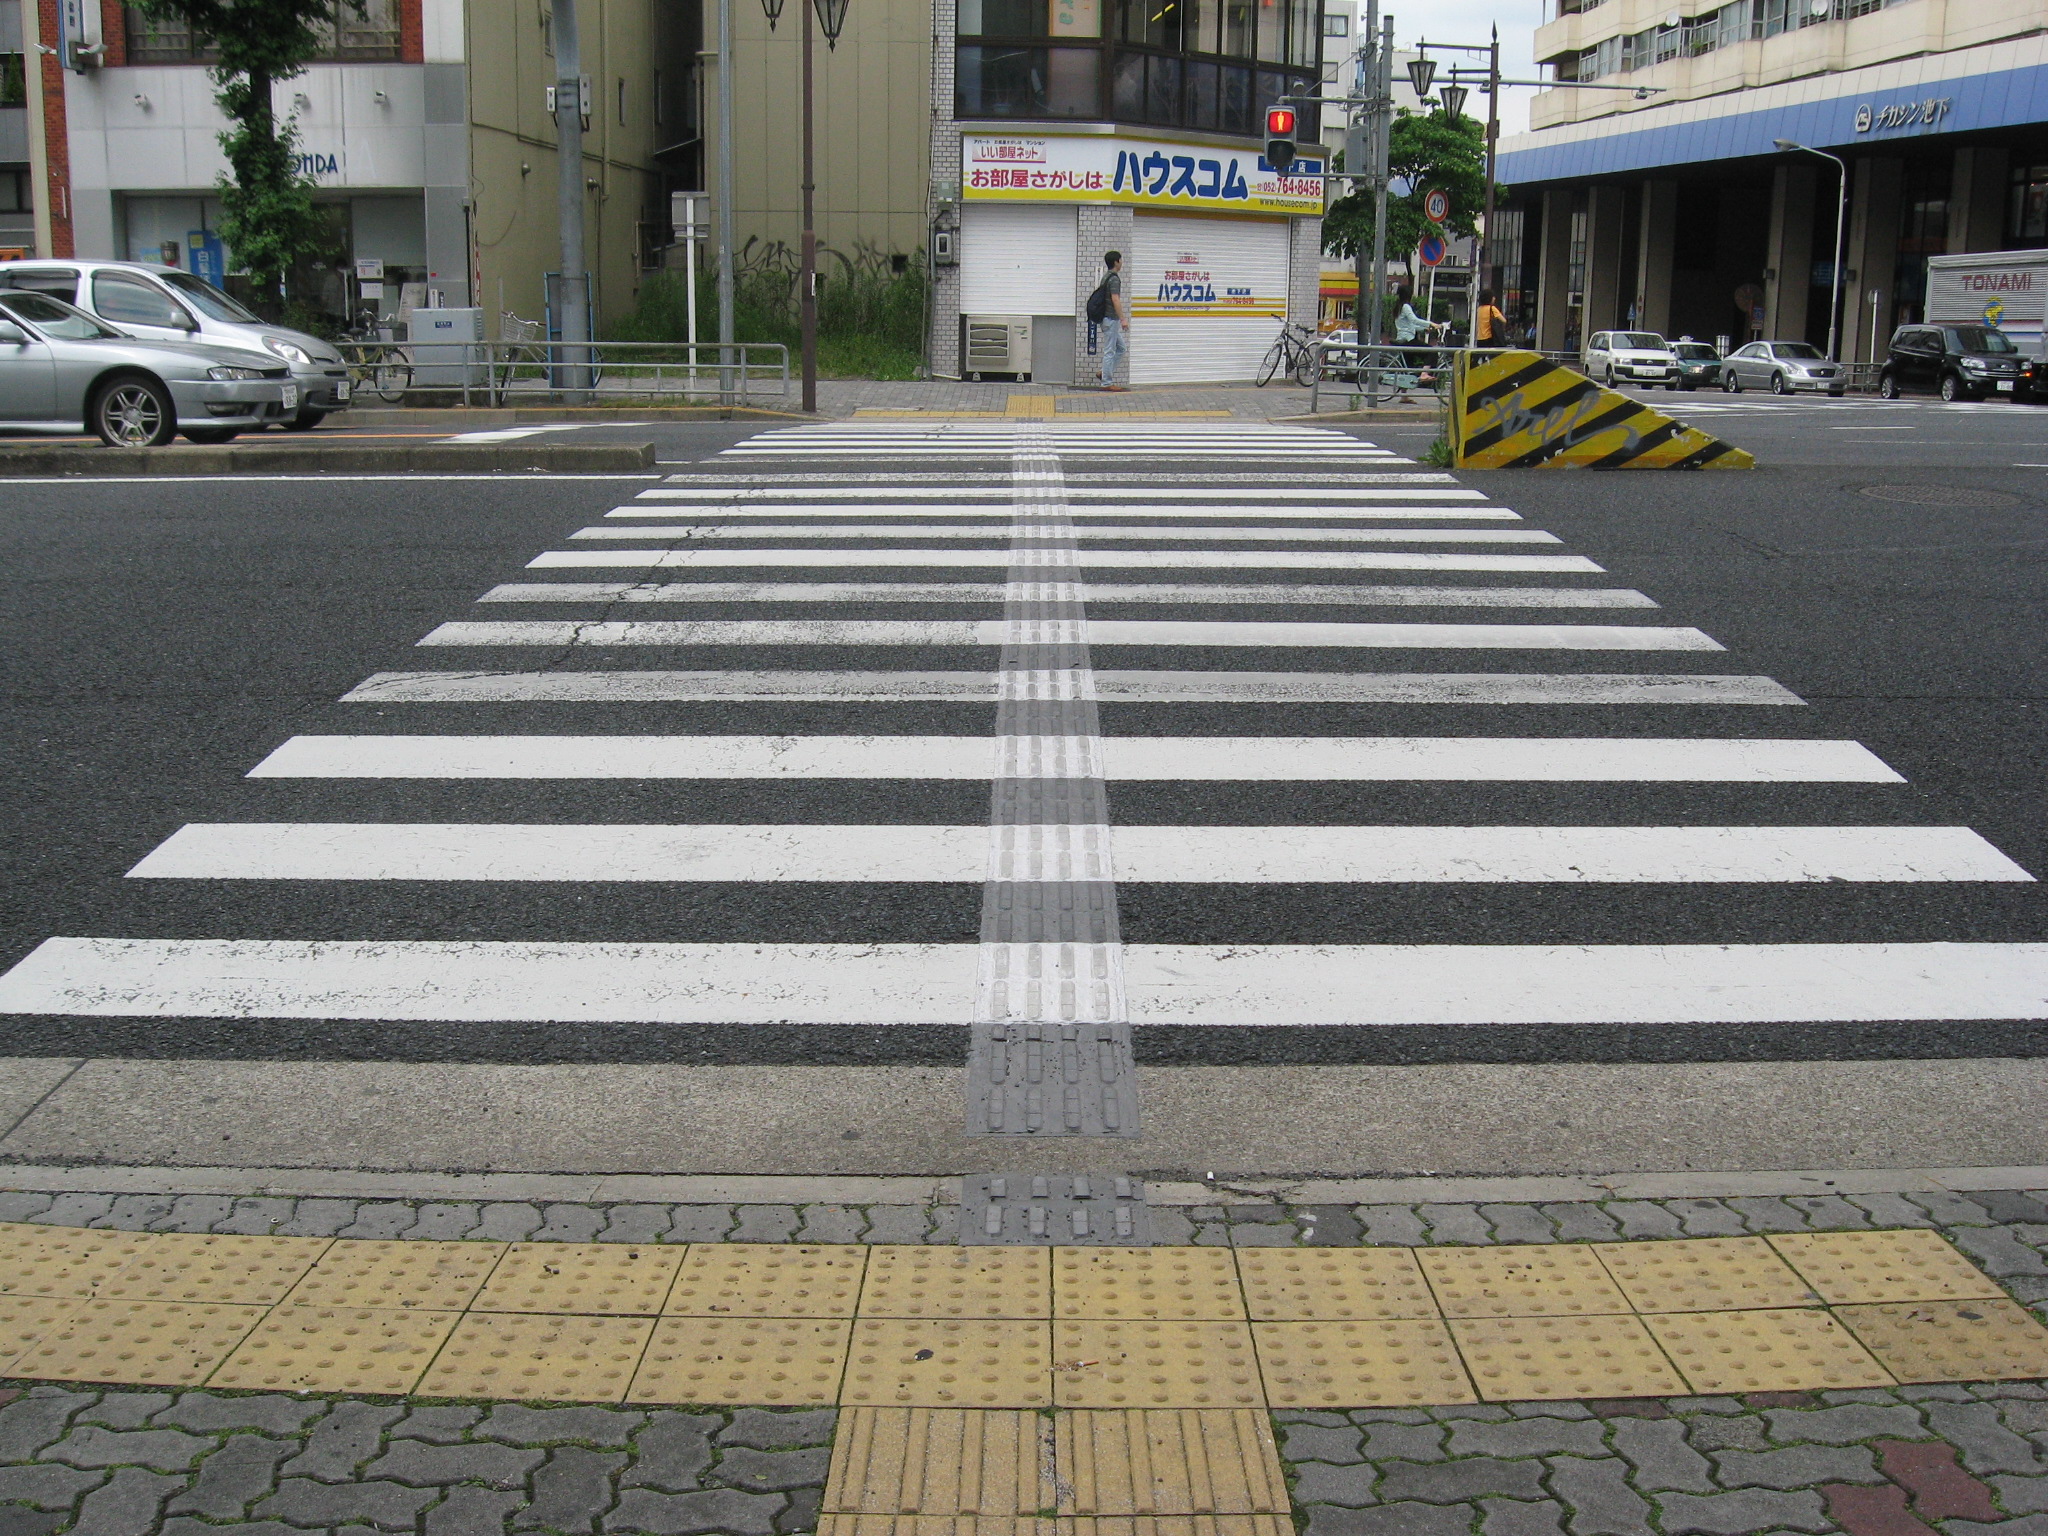 File:Pedestrian Crossing with Textured Paving Blocks.jpg - Wikimedia ...